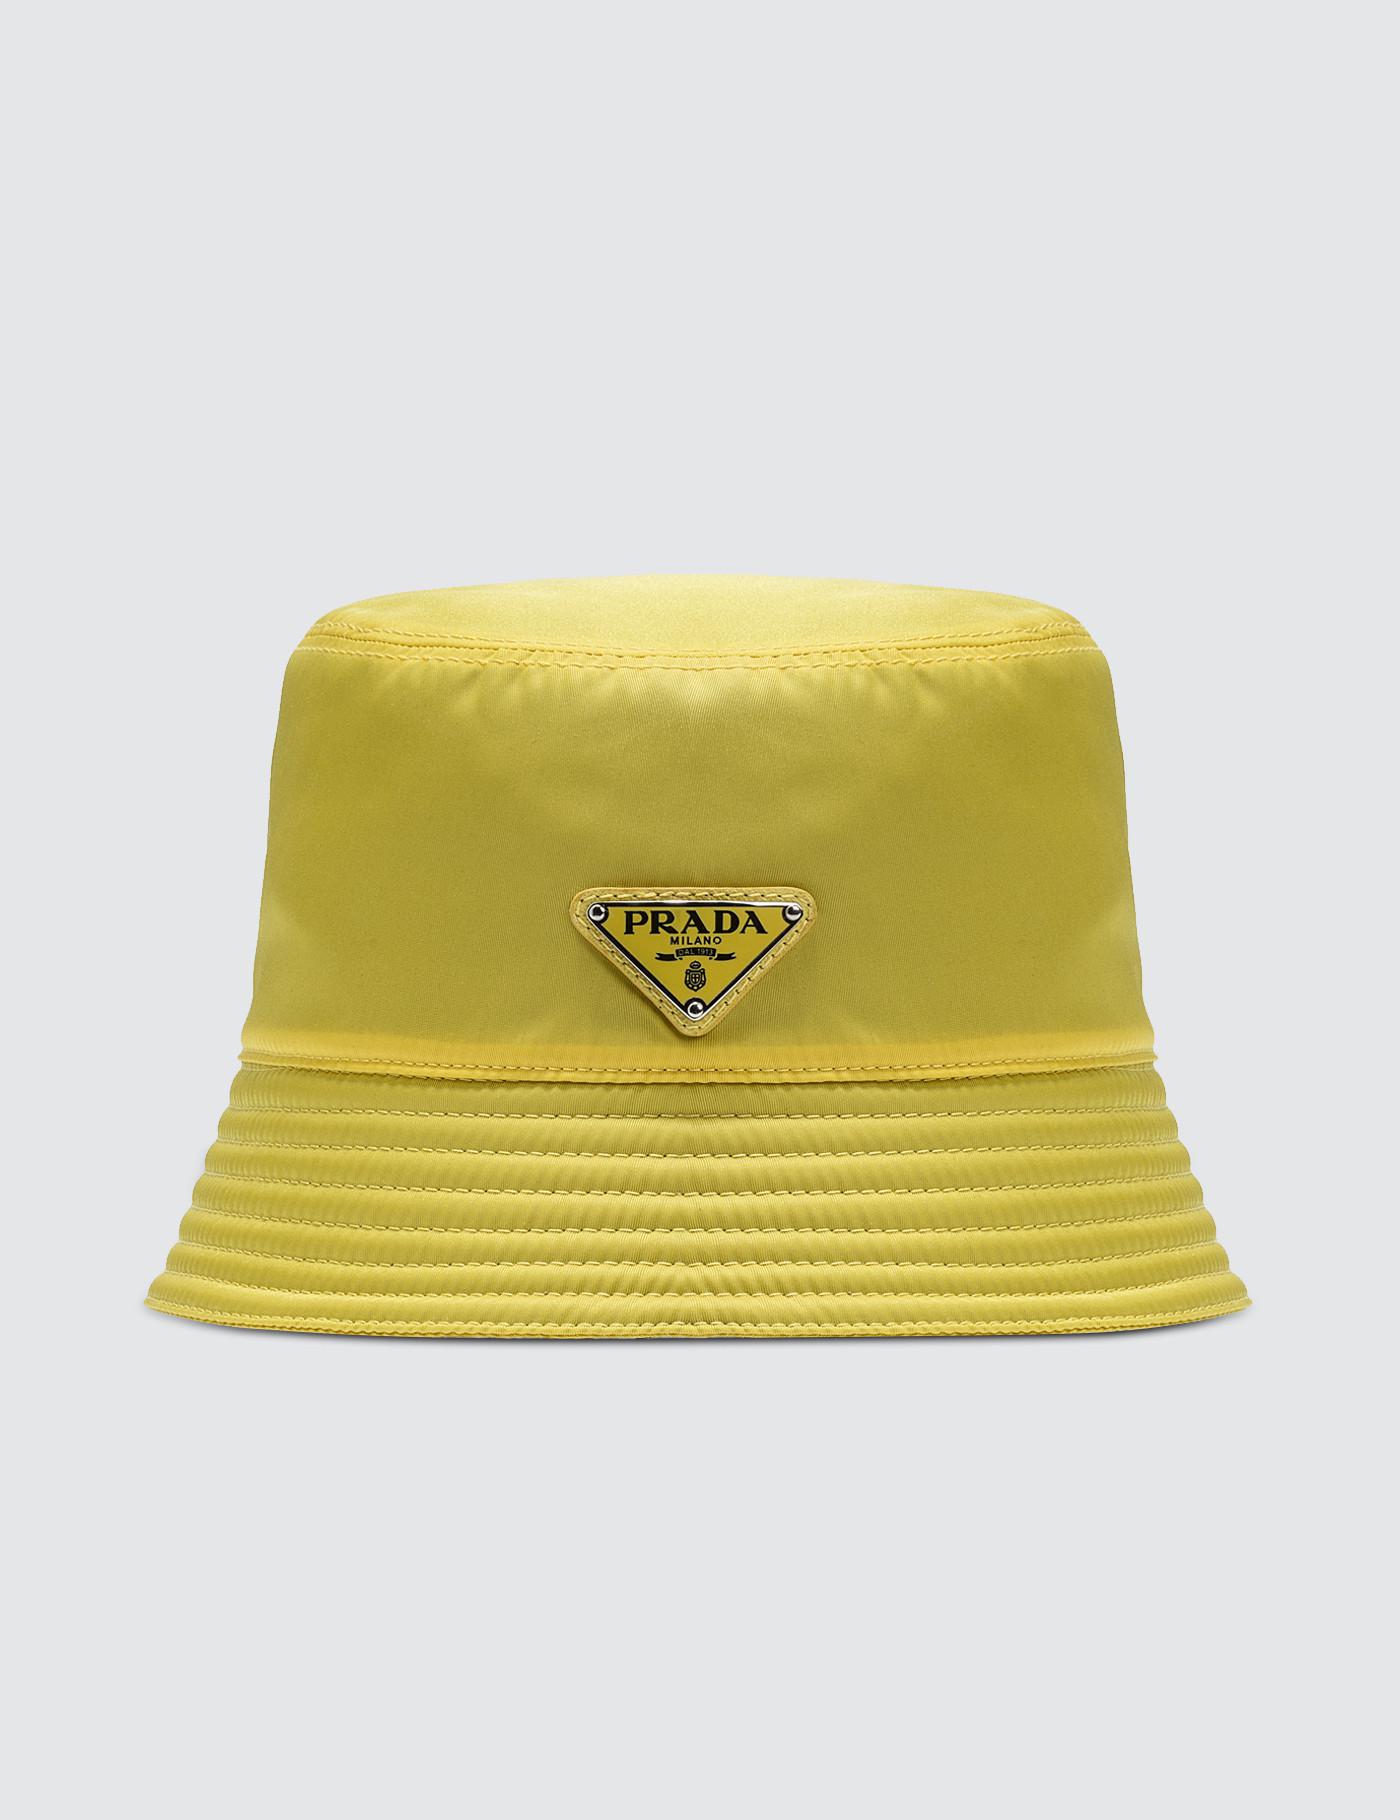 Prada Cotton Bucket Hat in Yellow for Men - Lyst